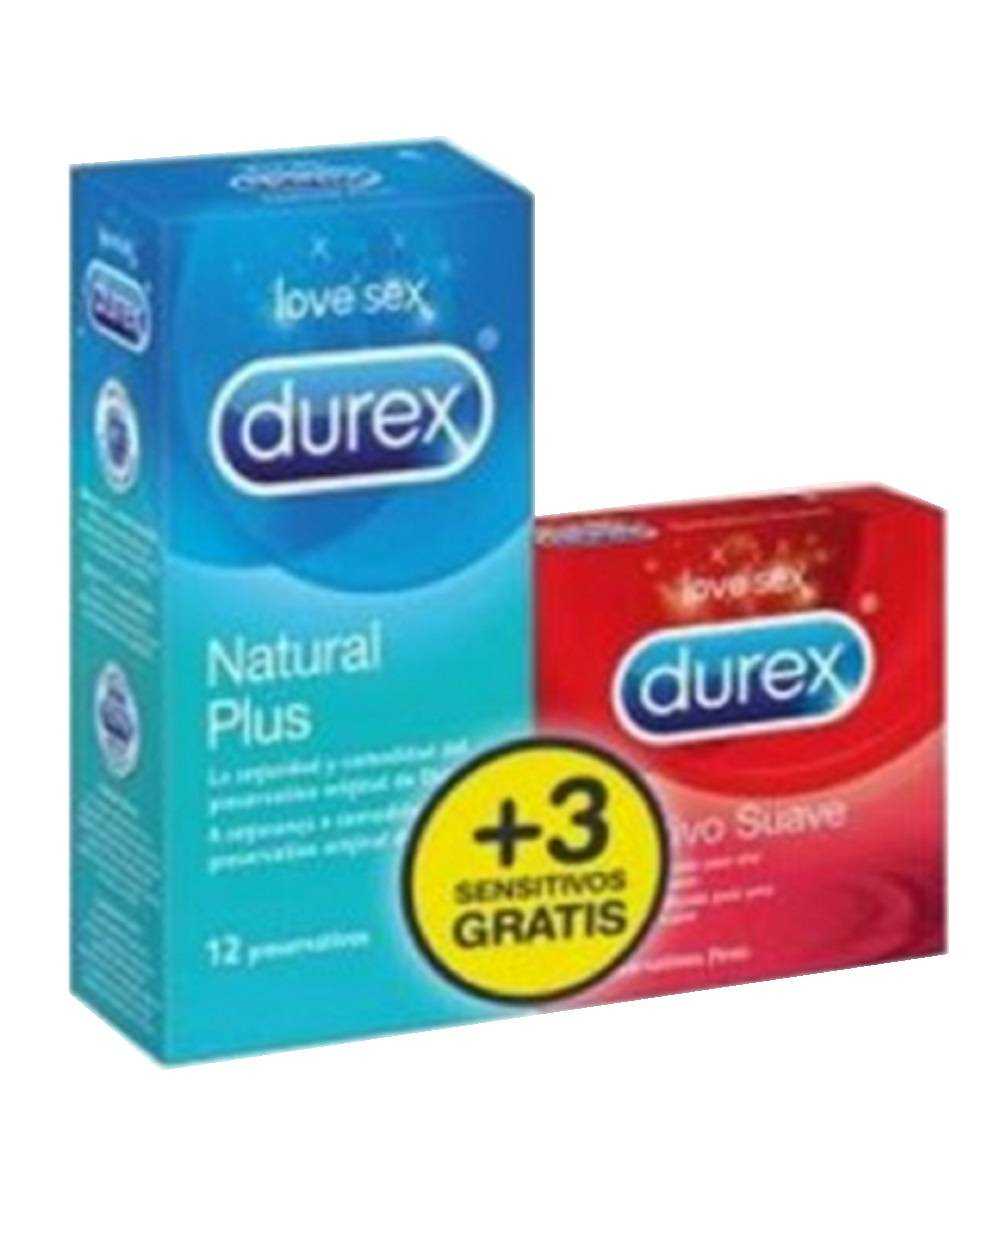 Preservativos Durex Natural Plus 12 + 3 sensitivos